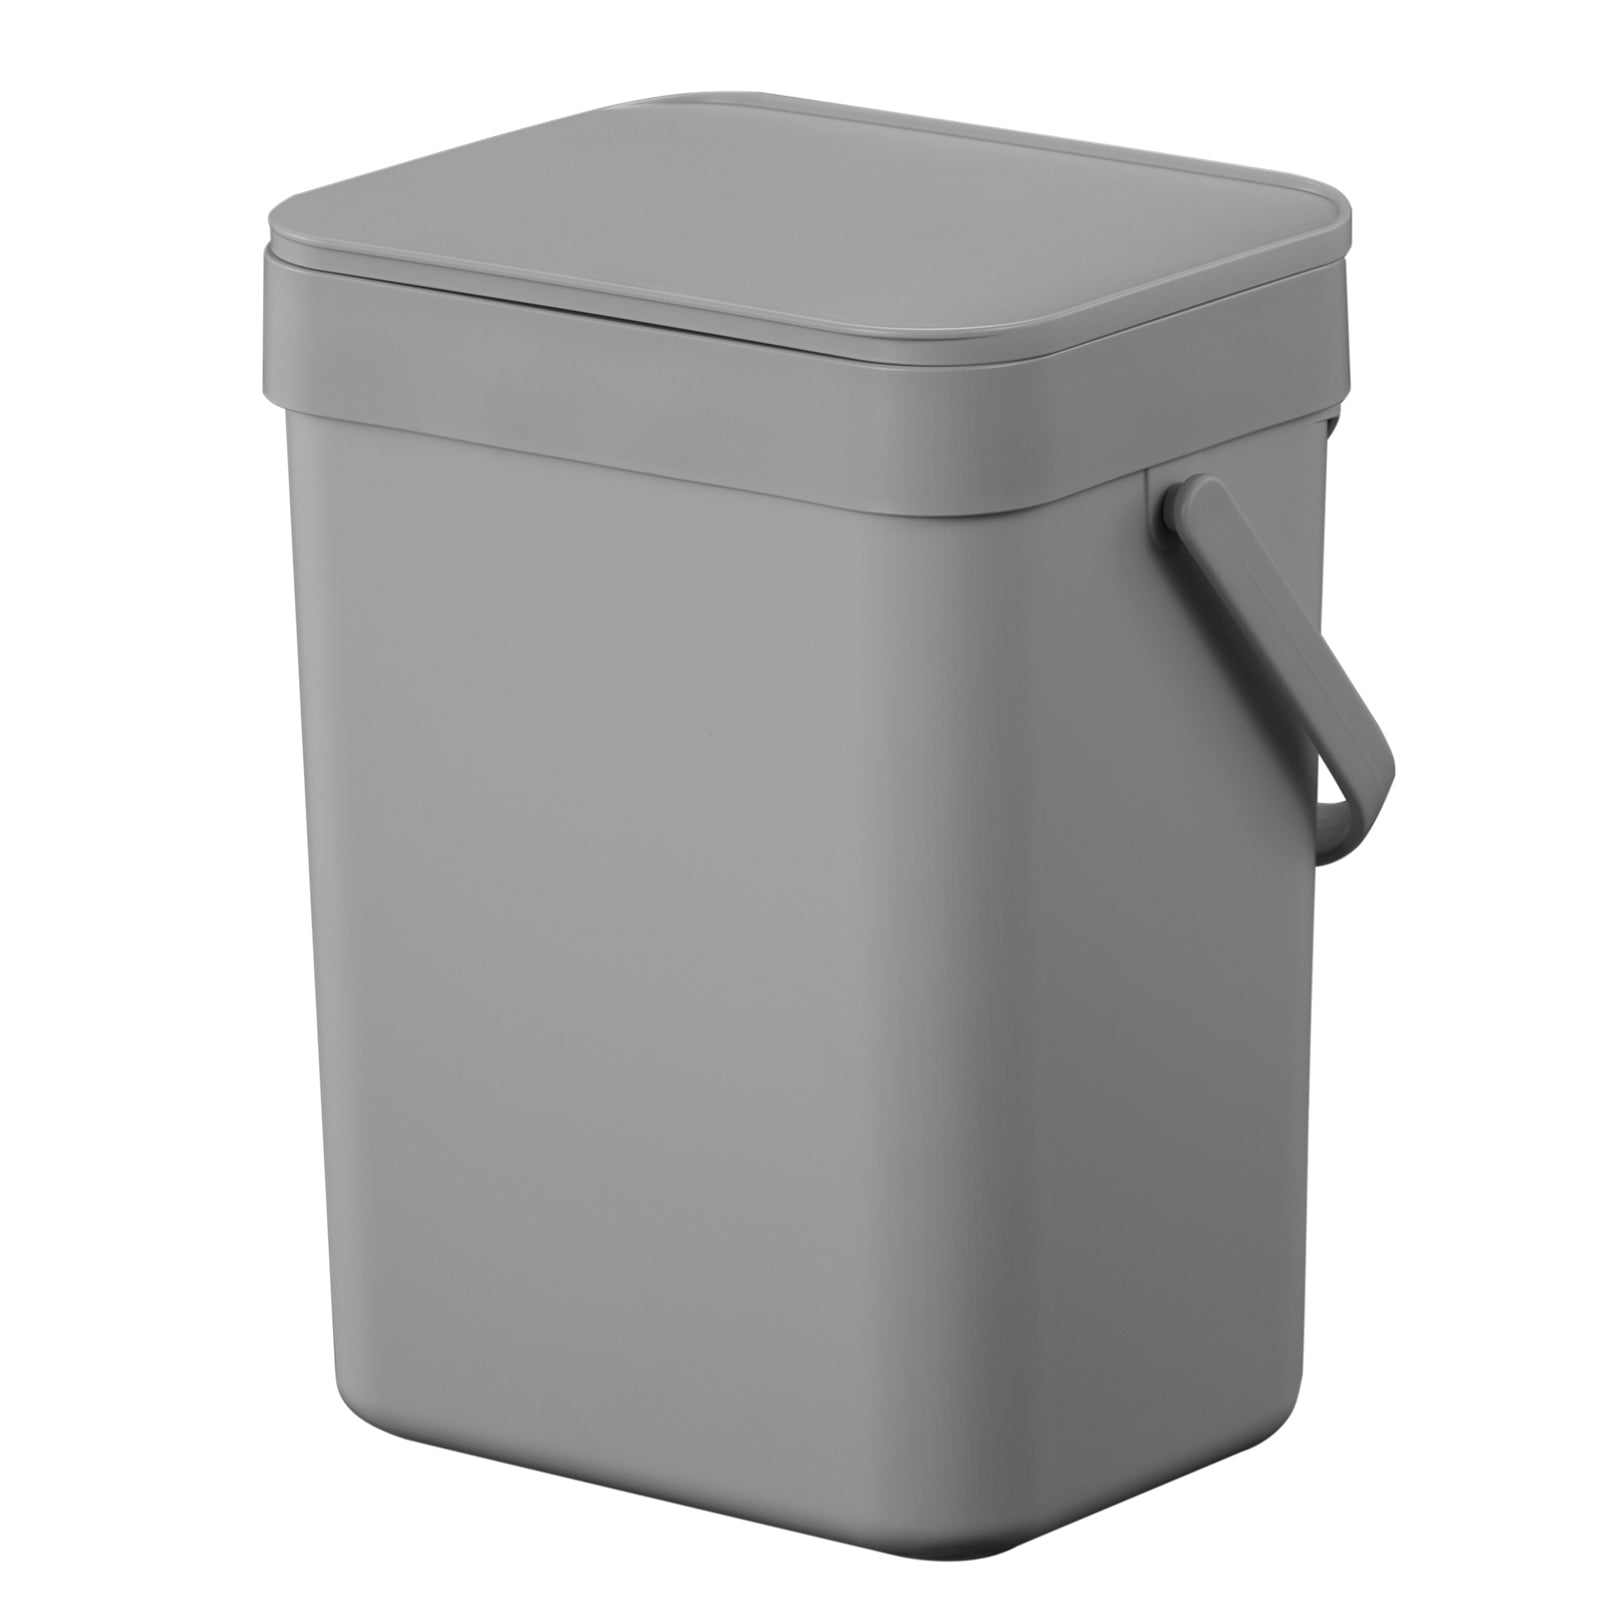 Puro II Compost Bin with Swing Lid - Dark Gray 7L / 1.85 Gal